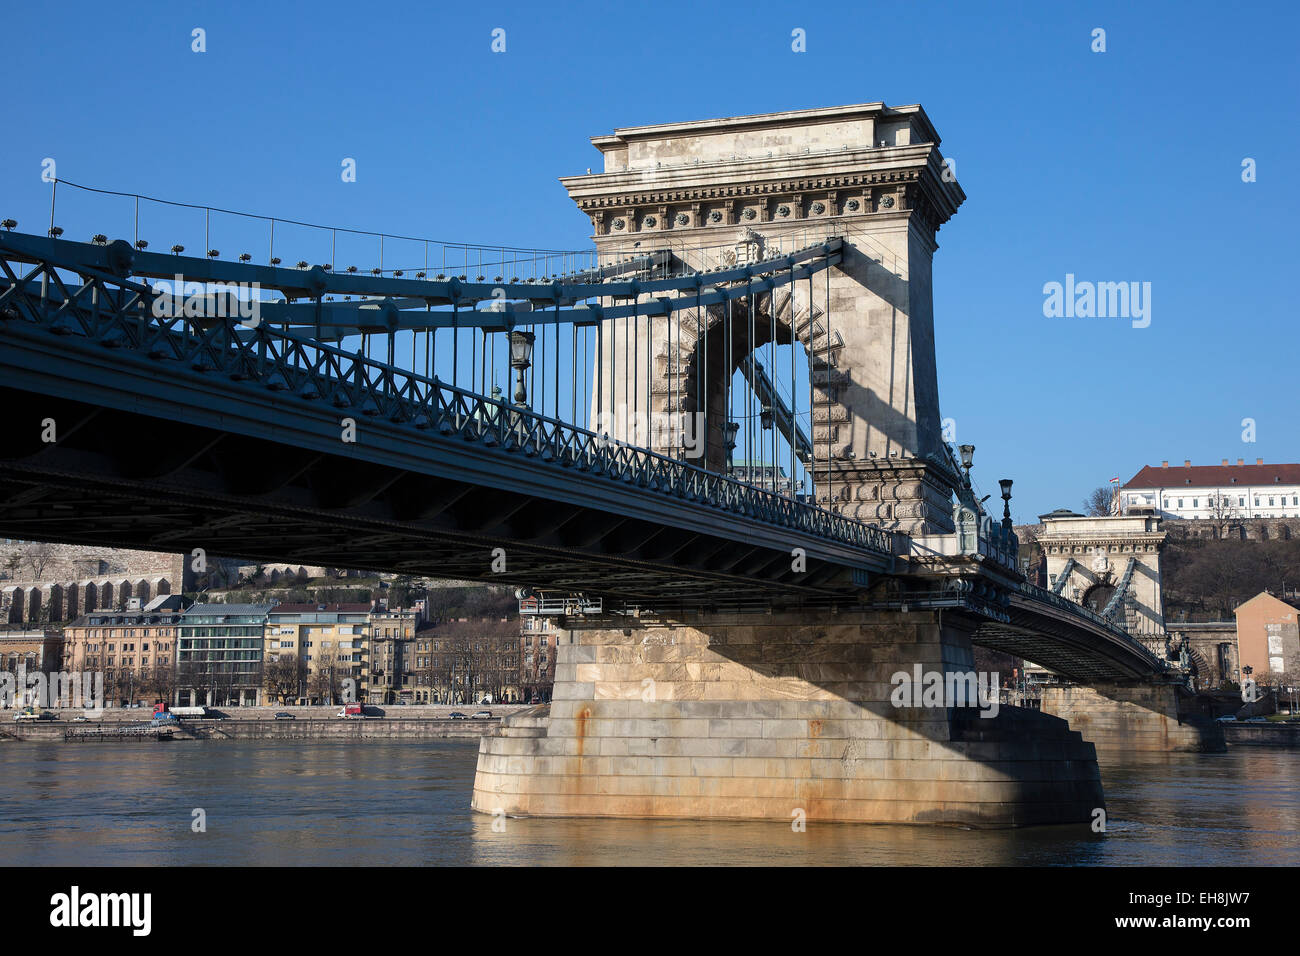 Chain Bridge, Budapest, Hungary, spanning across the river Danube Stock Photo